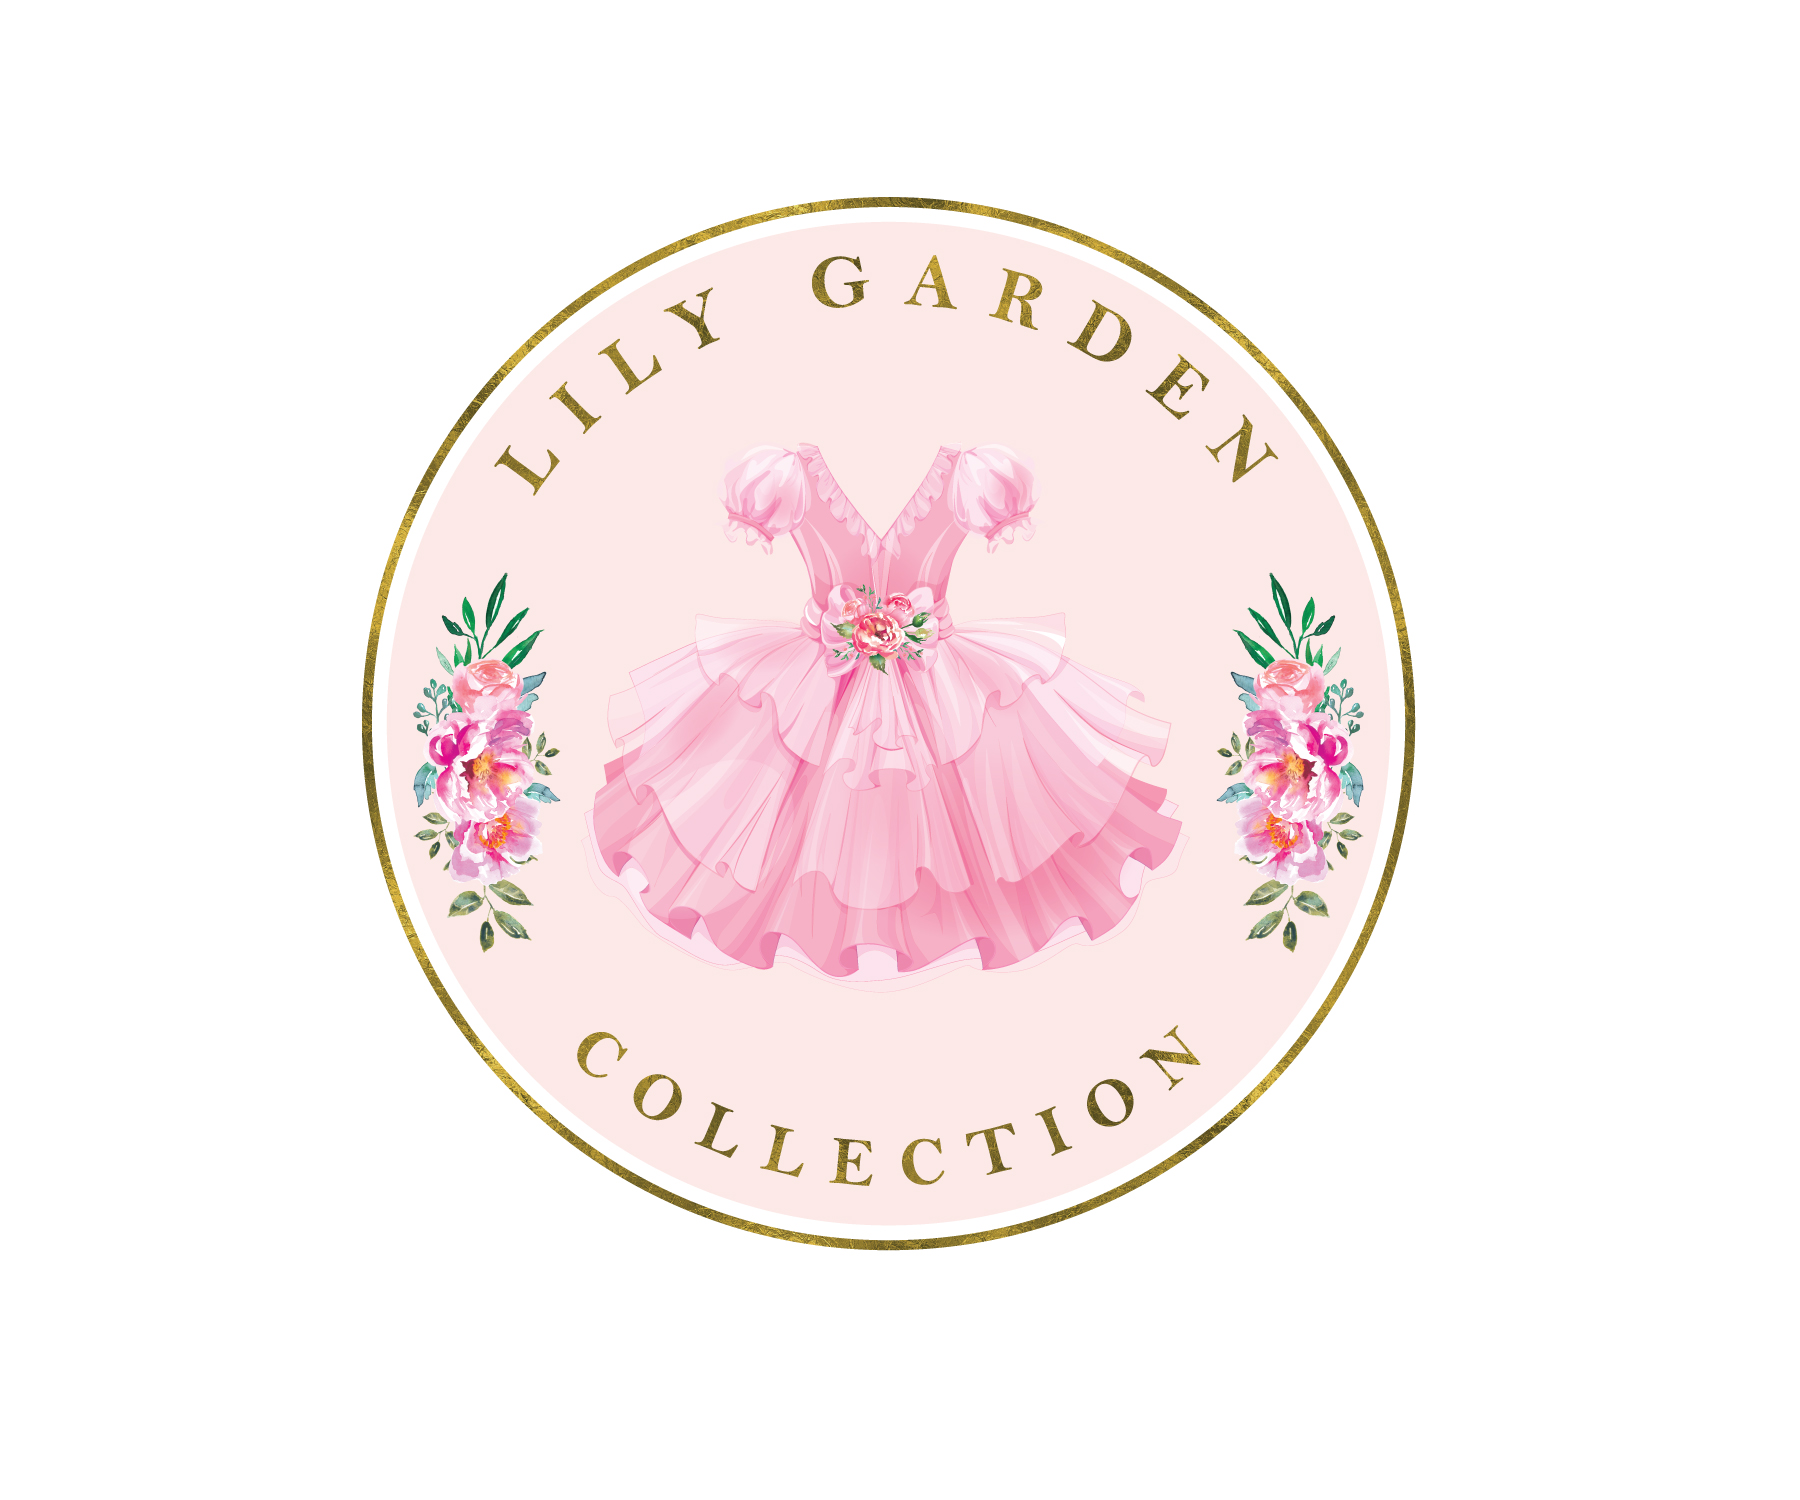 Lily garden1